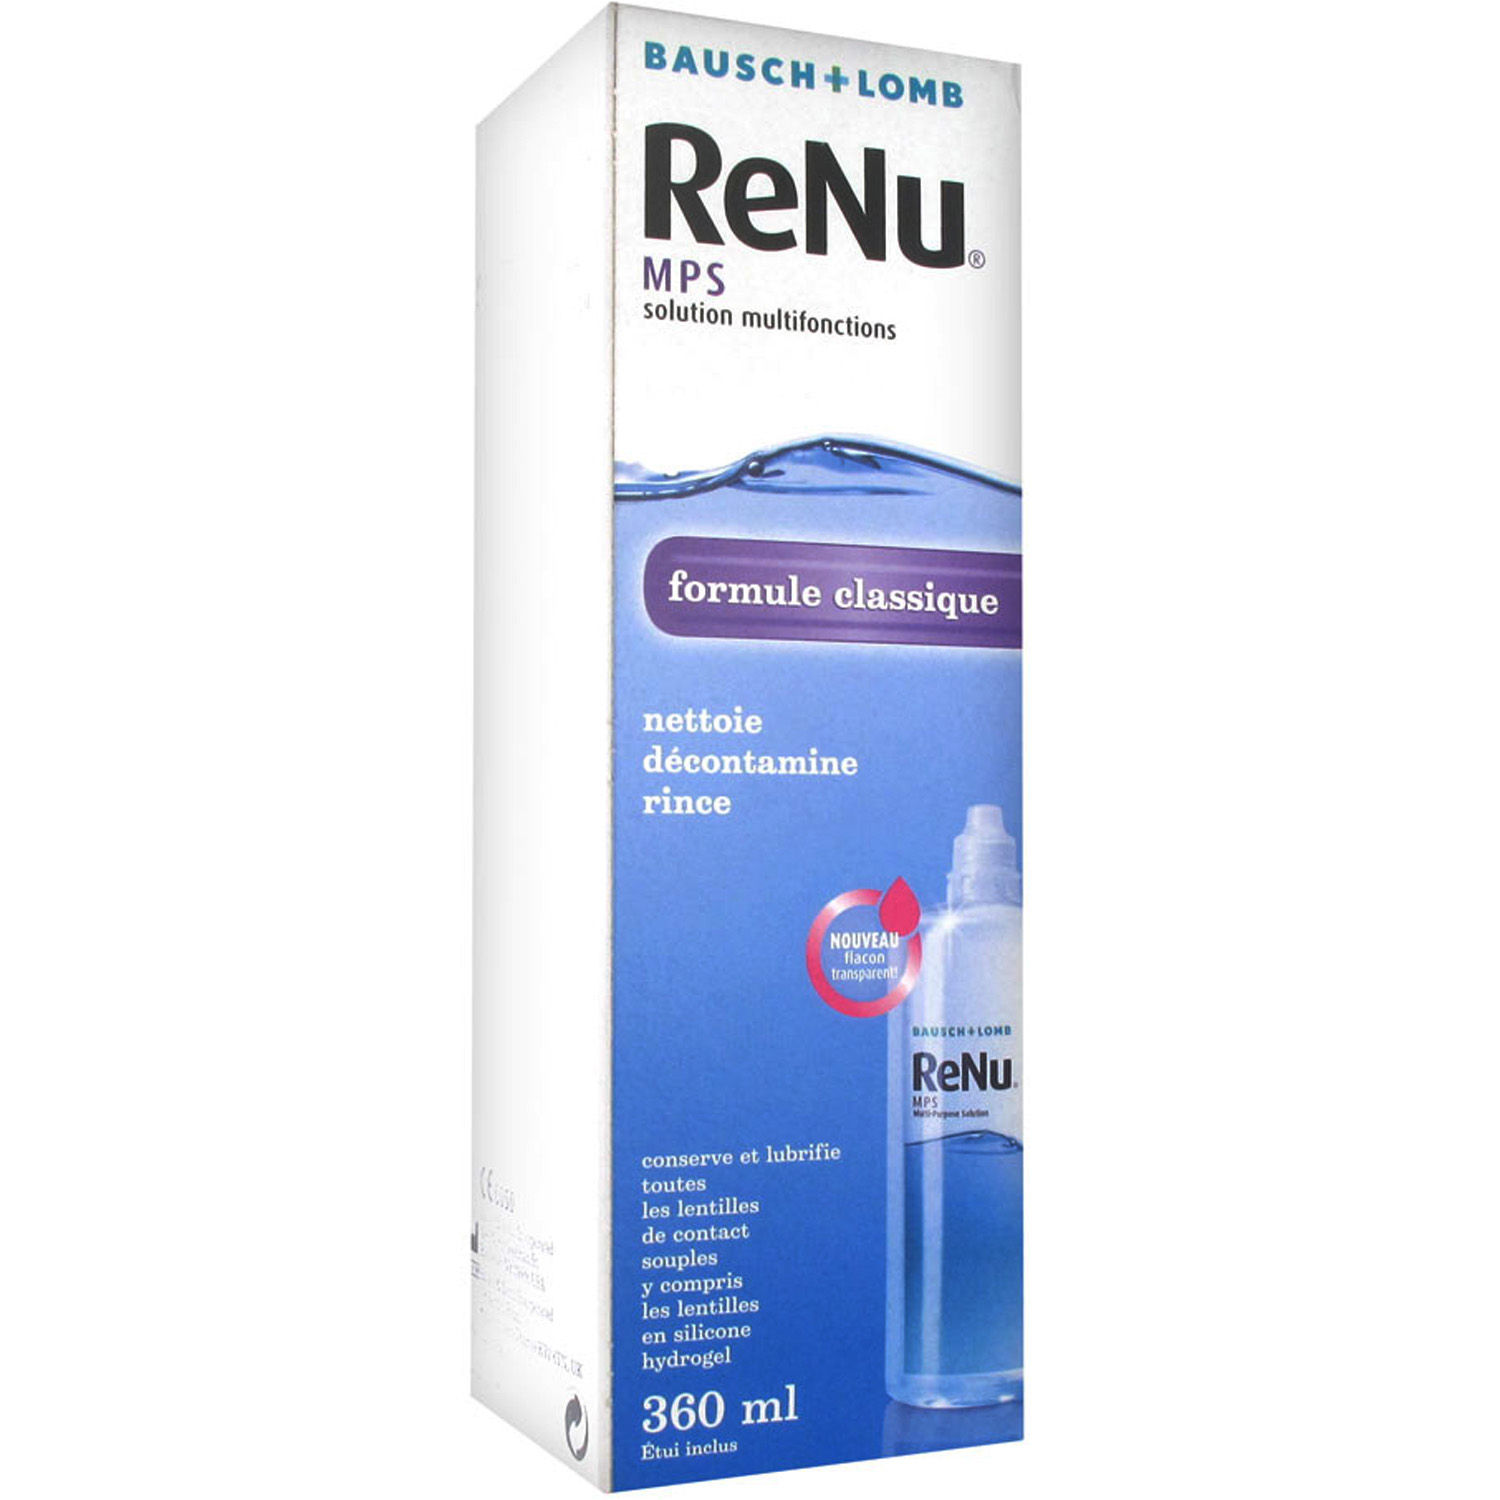 Renu Multi Plus Solution, 360 ml, Pack of 1 